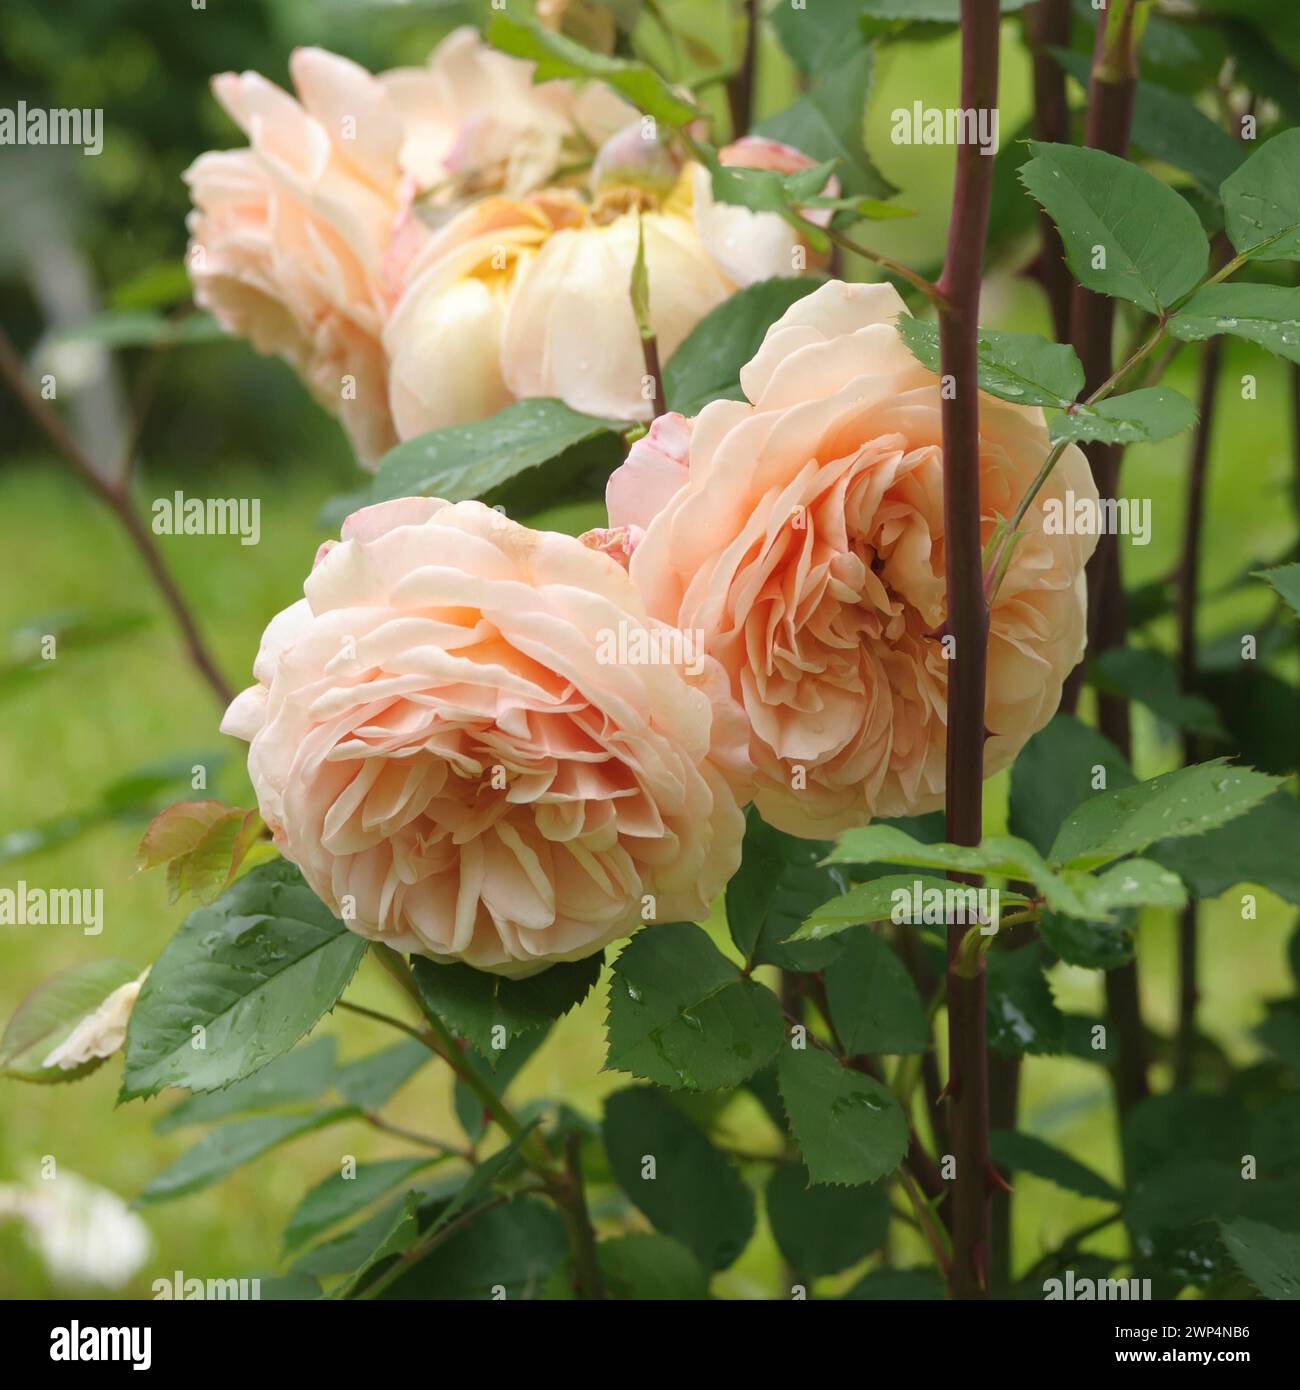 English rose (Rosa CHARLES AUSTIN), Rosenneuheitengarten am Beutig, Baden-Baden, Baden-Wuerttemberg, Germany Stock Photo